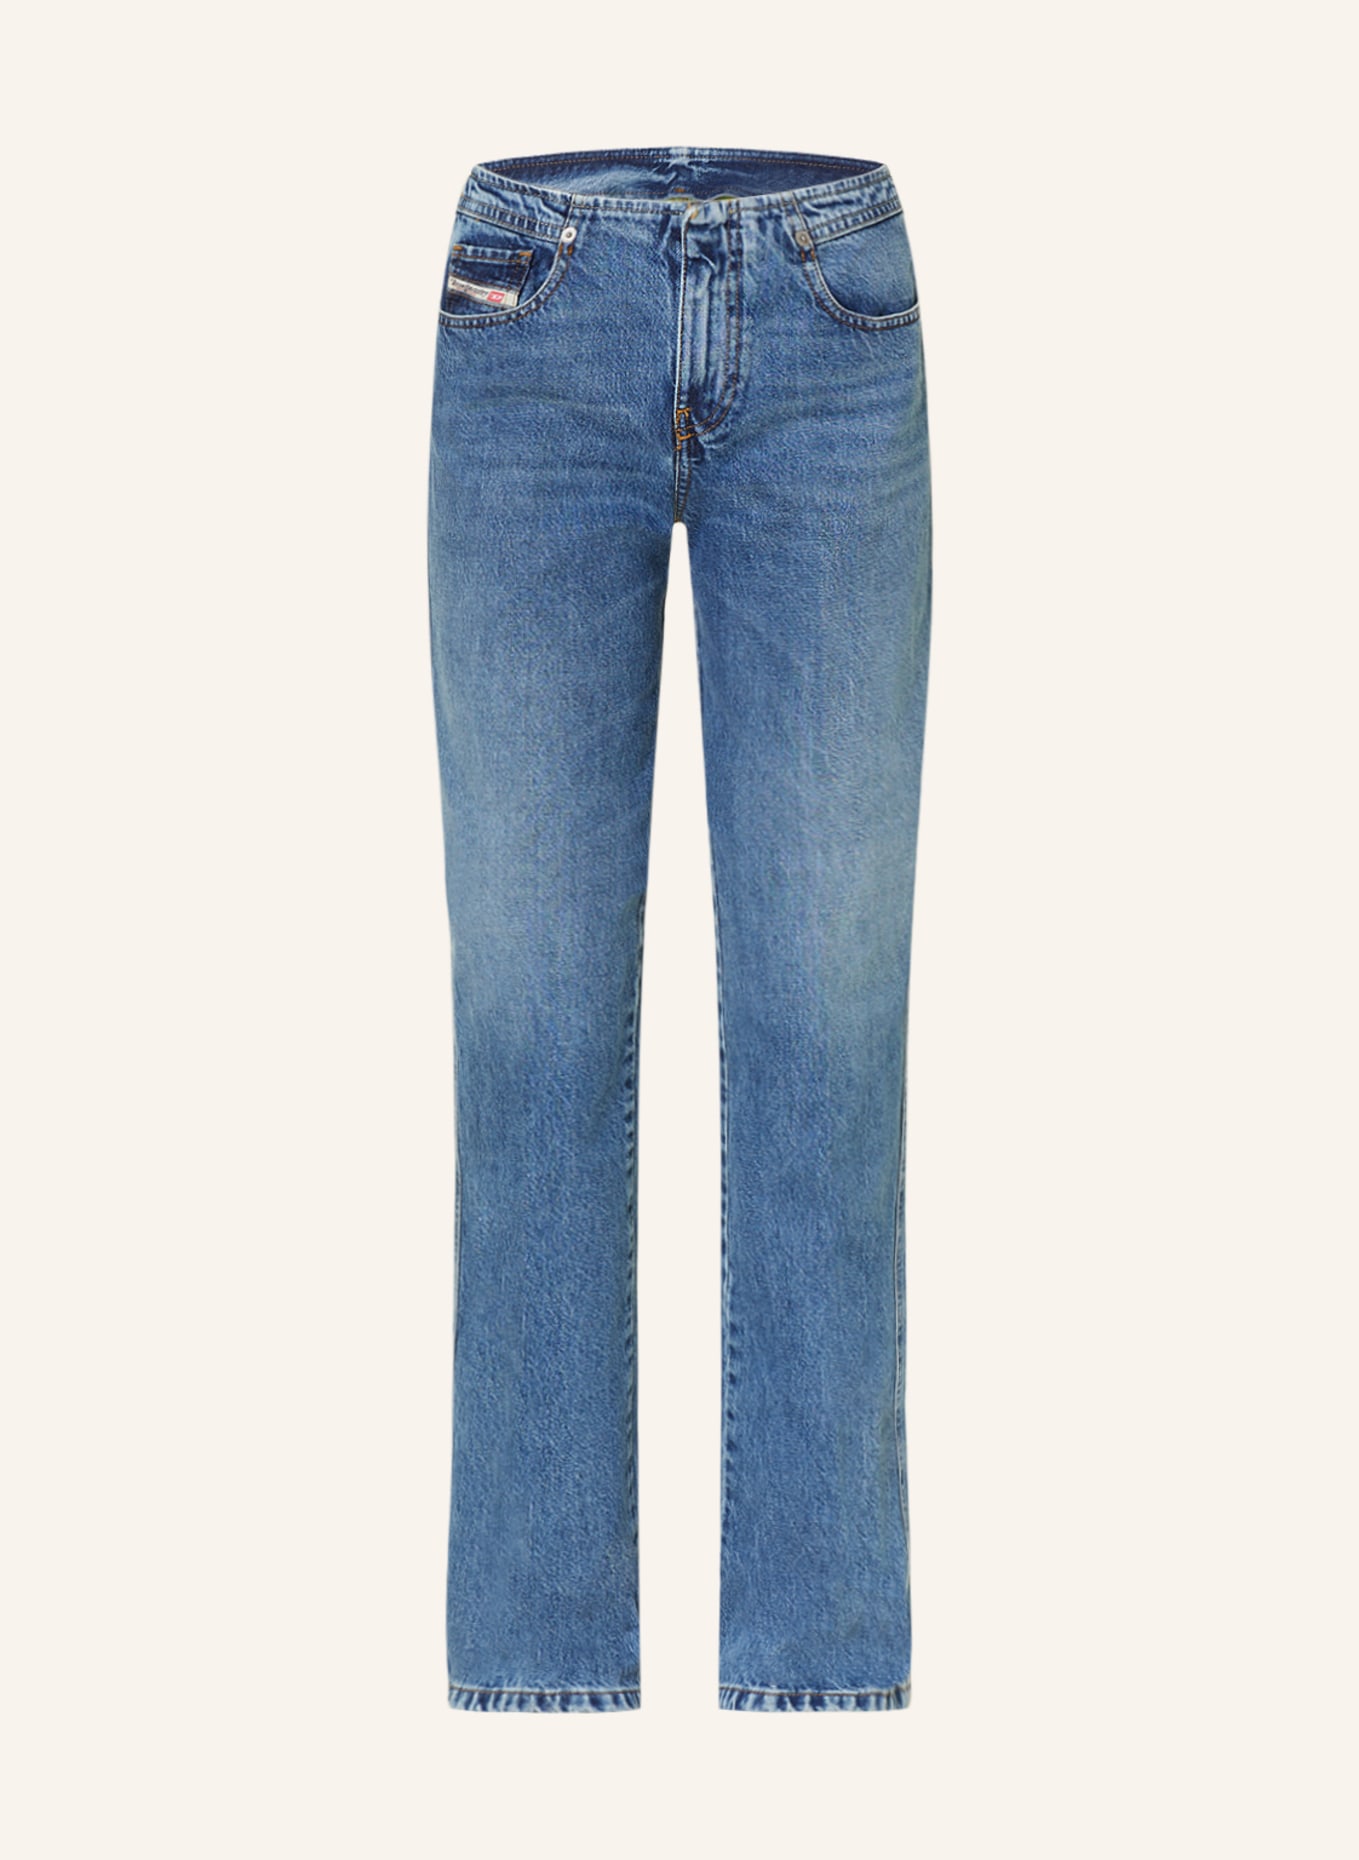 DIESEL Jeans D-ESCRIPTION, Farbe: 01 DENIM (Bild 1)